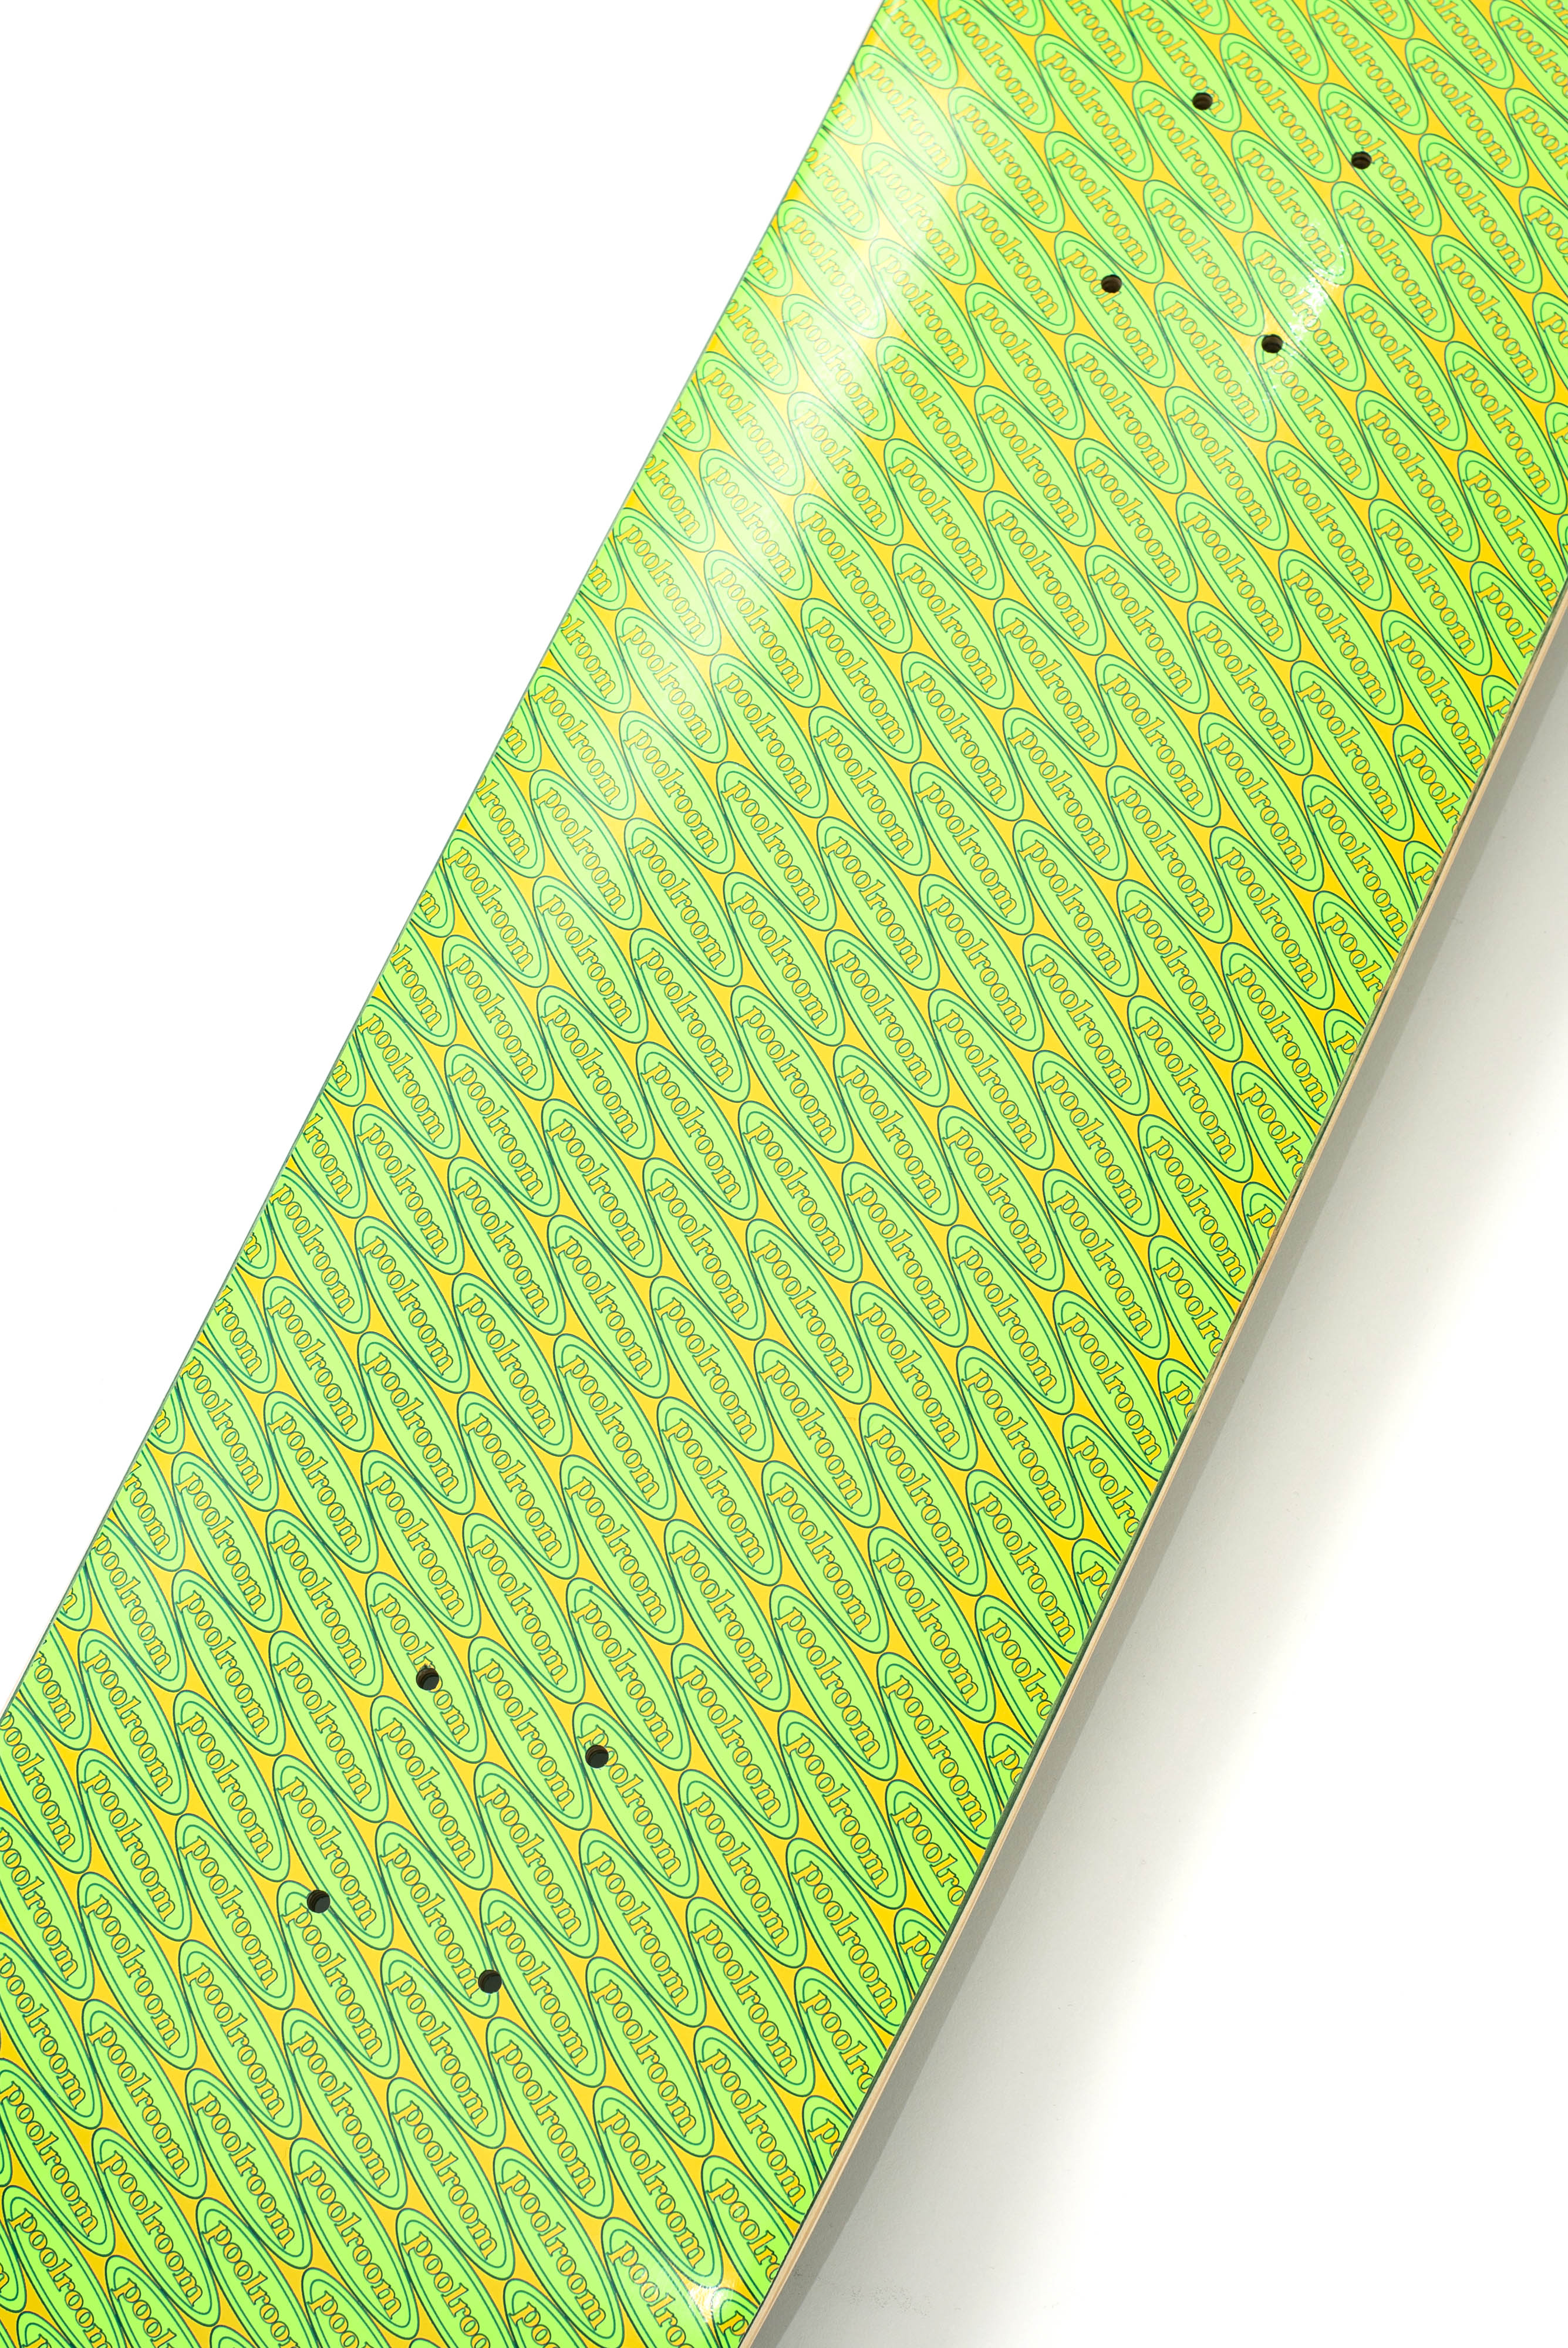 Wallpaper green yellowblue â poolroom skateboards